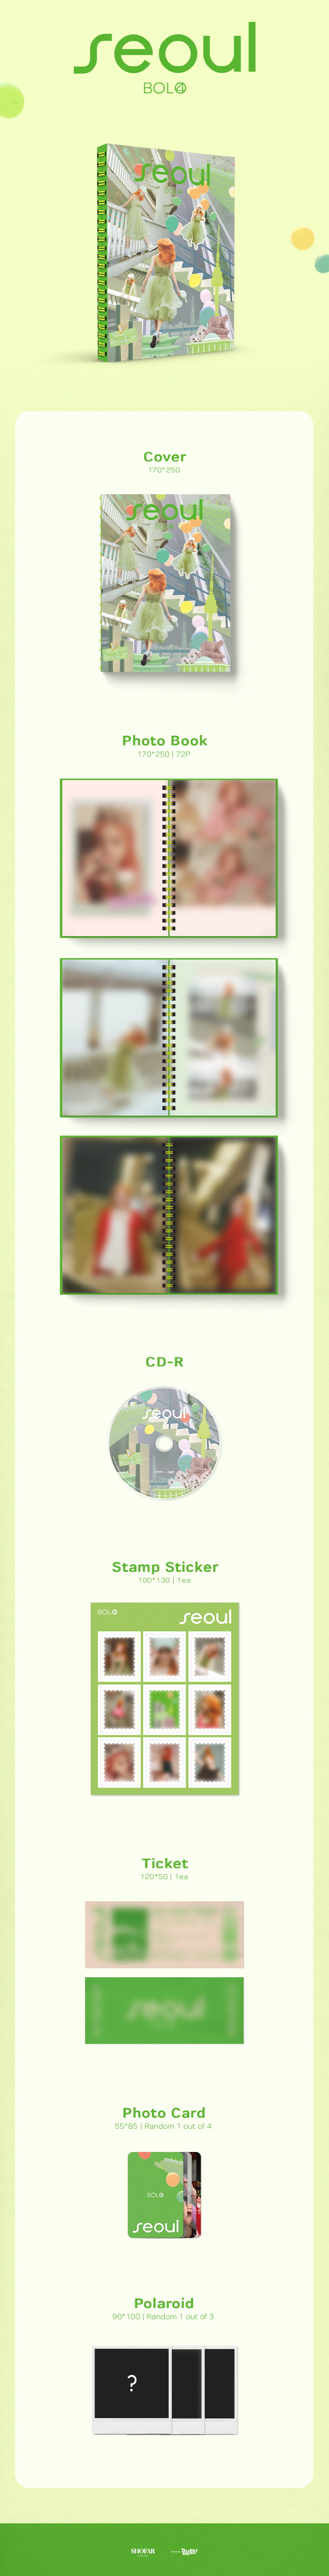 BOL4 - MINI ALBUM [Seoul] album seoul bolbbalgan4 minialbum cd BOL4 BOL4album BOL4cd BOL4SEOUL BOL4MINIALBUM